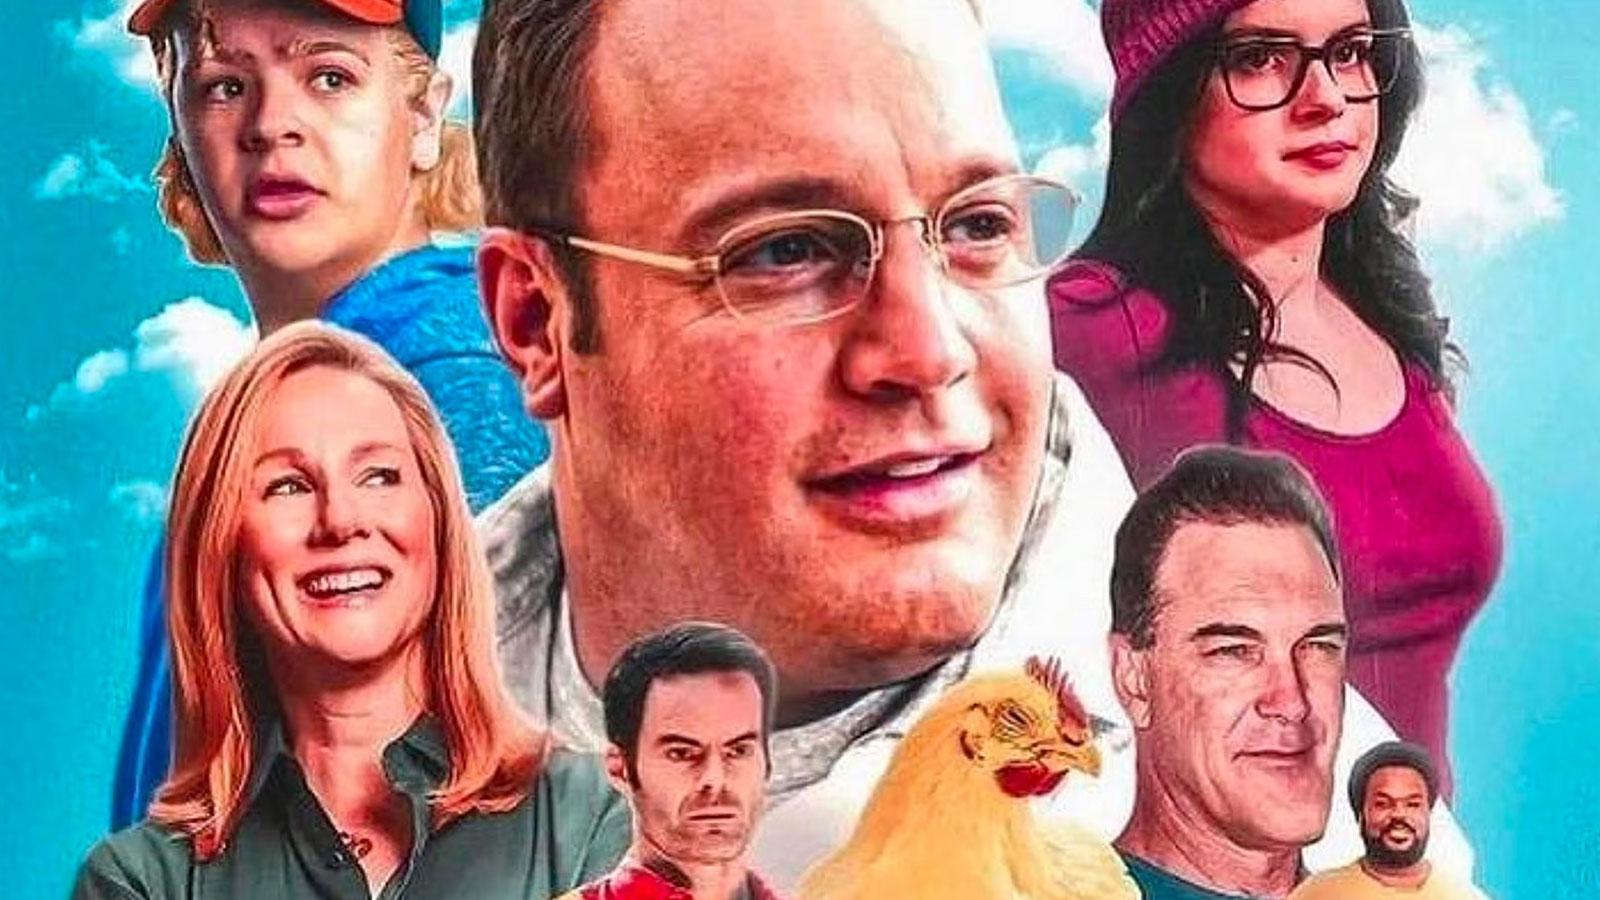 Family Guy Netflix